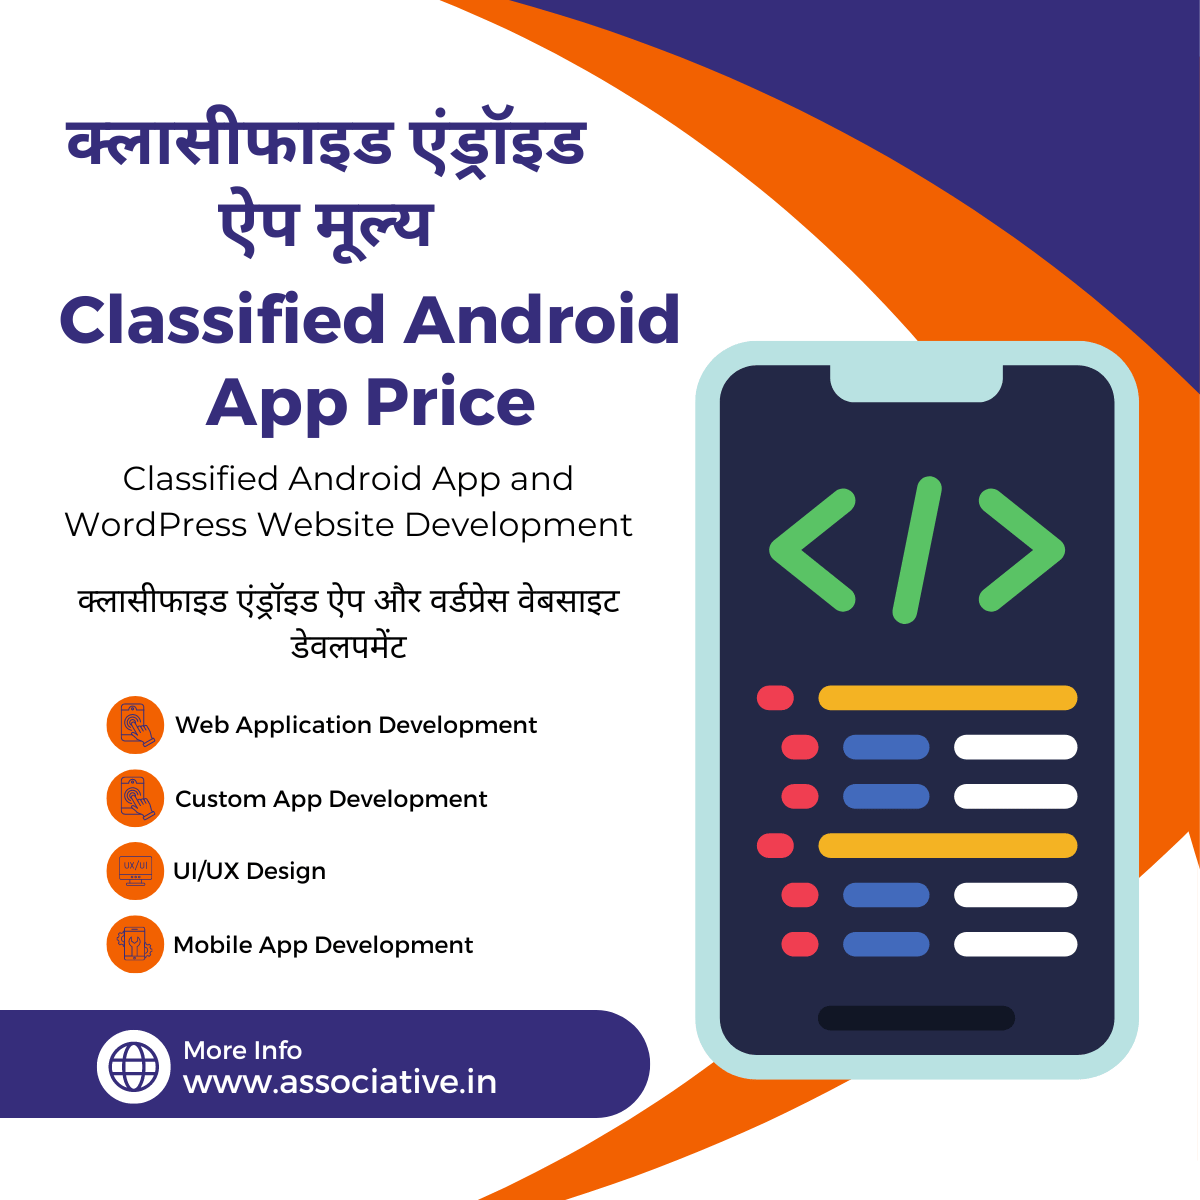 Classified Android App Price
क्लासीफाइड एंड्रॉइड ऐप मूल्य